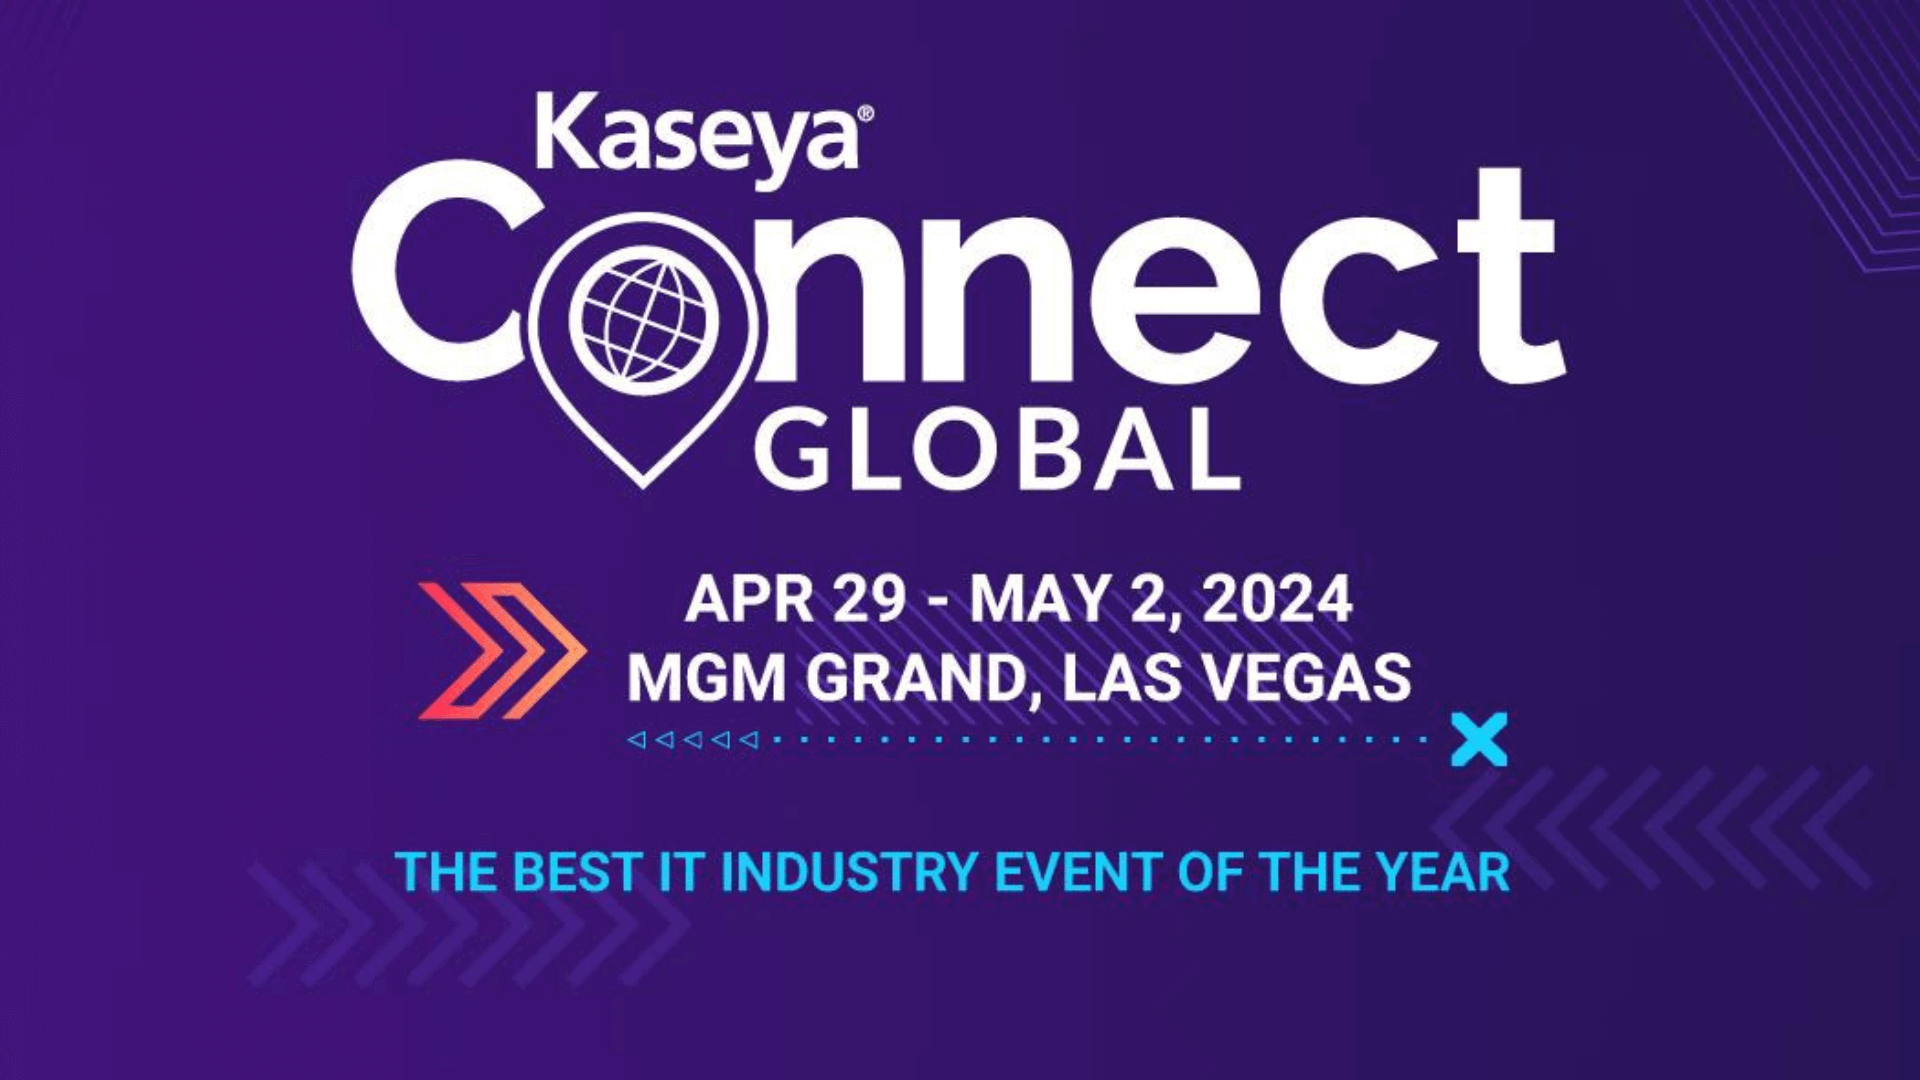 Kaseya Connect Global logo